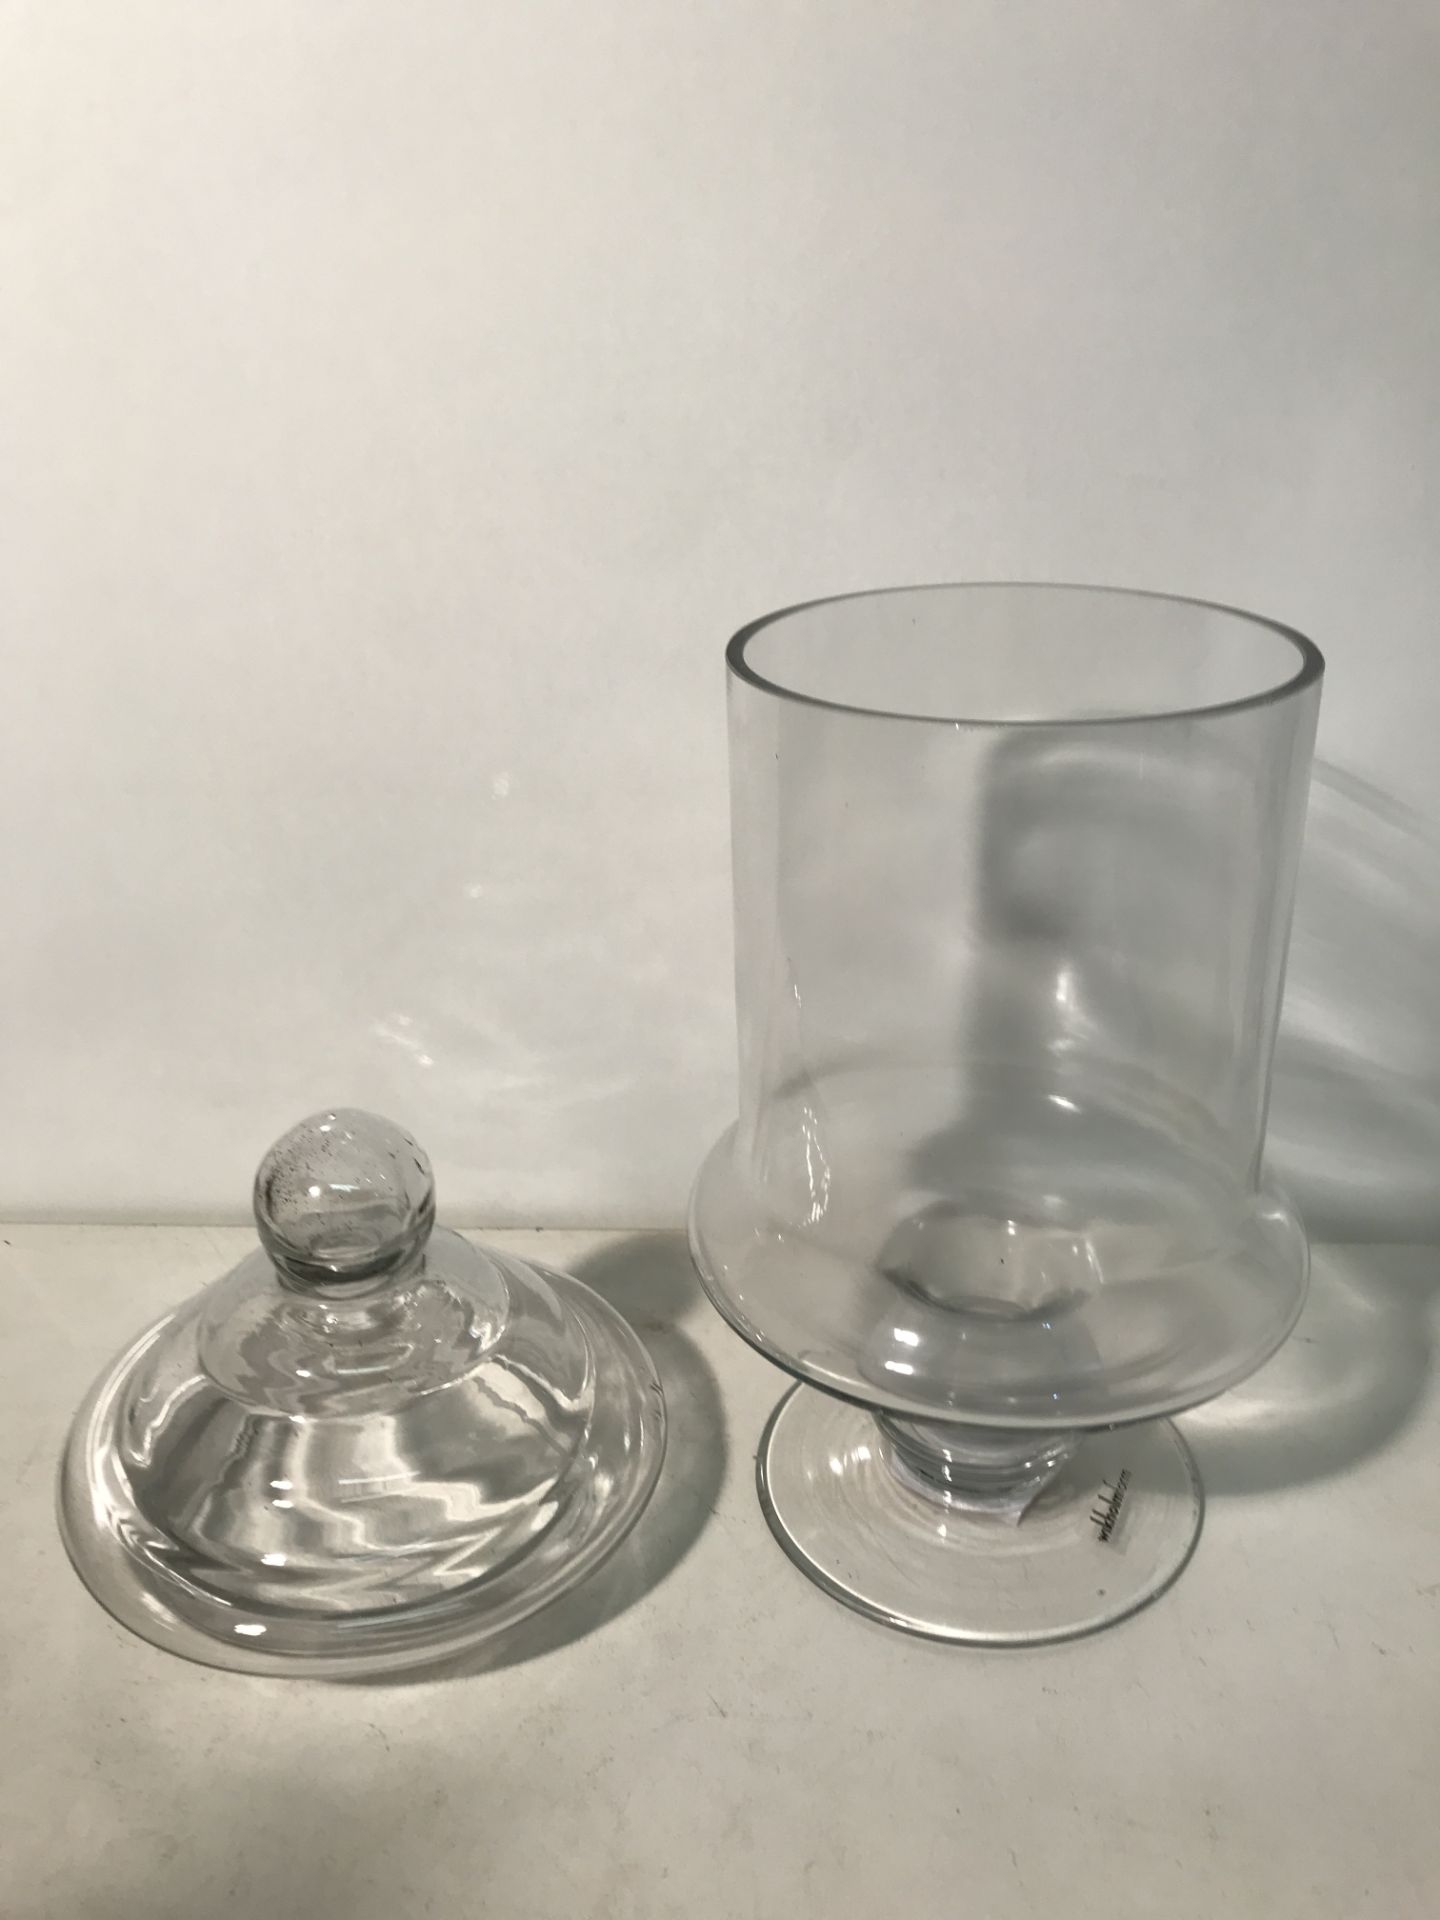 6 x Large Glass Bonbon Jars w/ Lids - Image 2 of 3